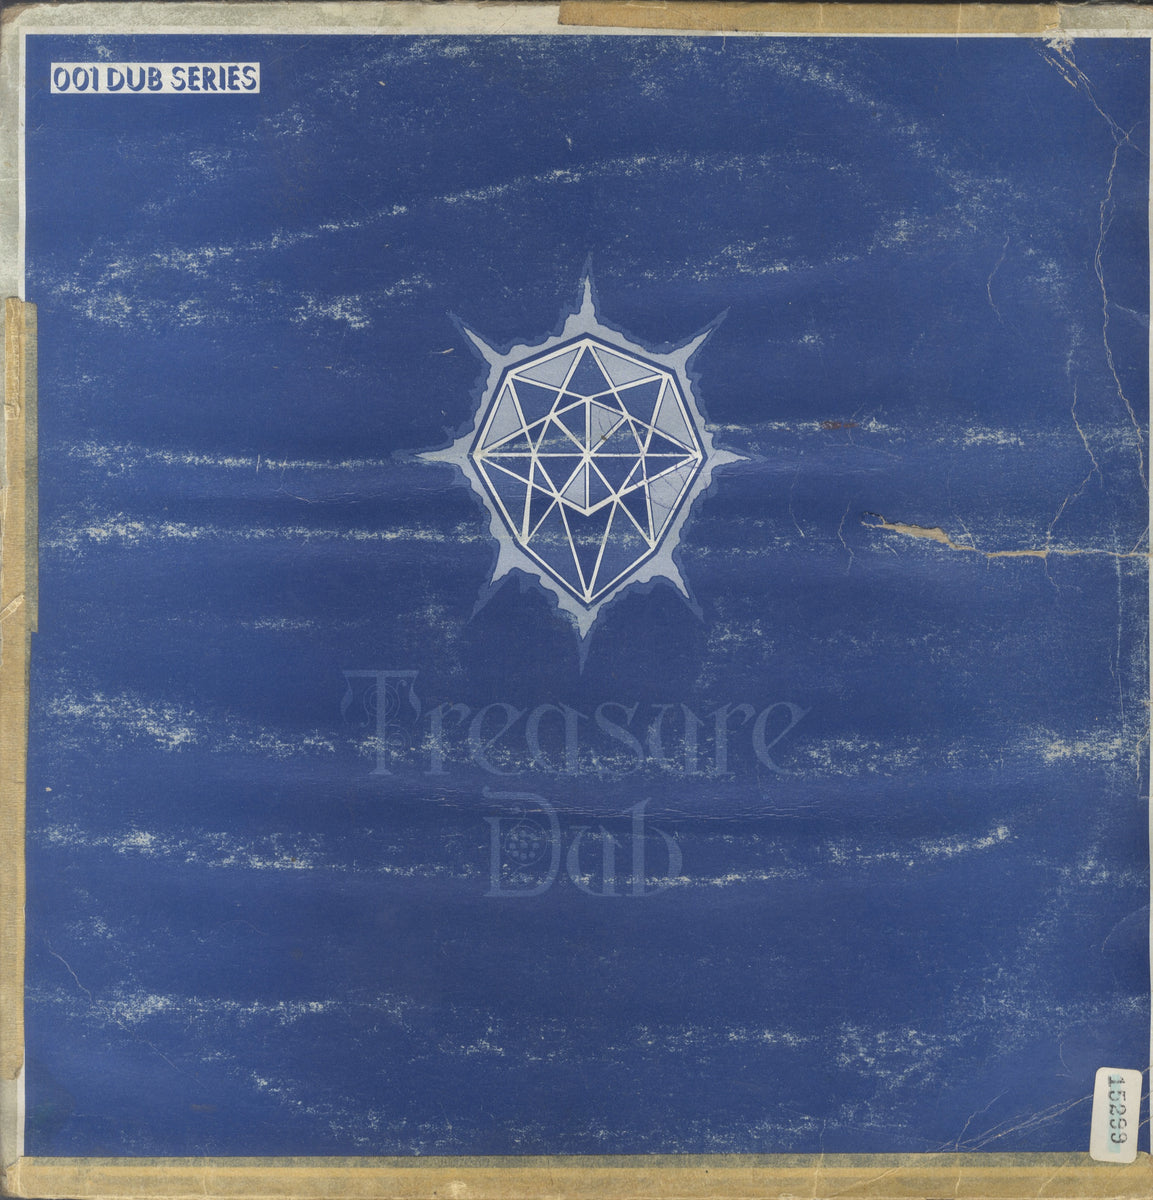 TREASURE DUB [Treasure Dub Vol 1]